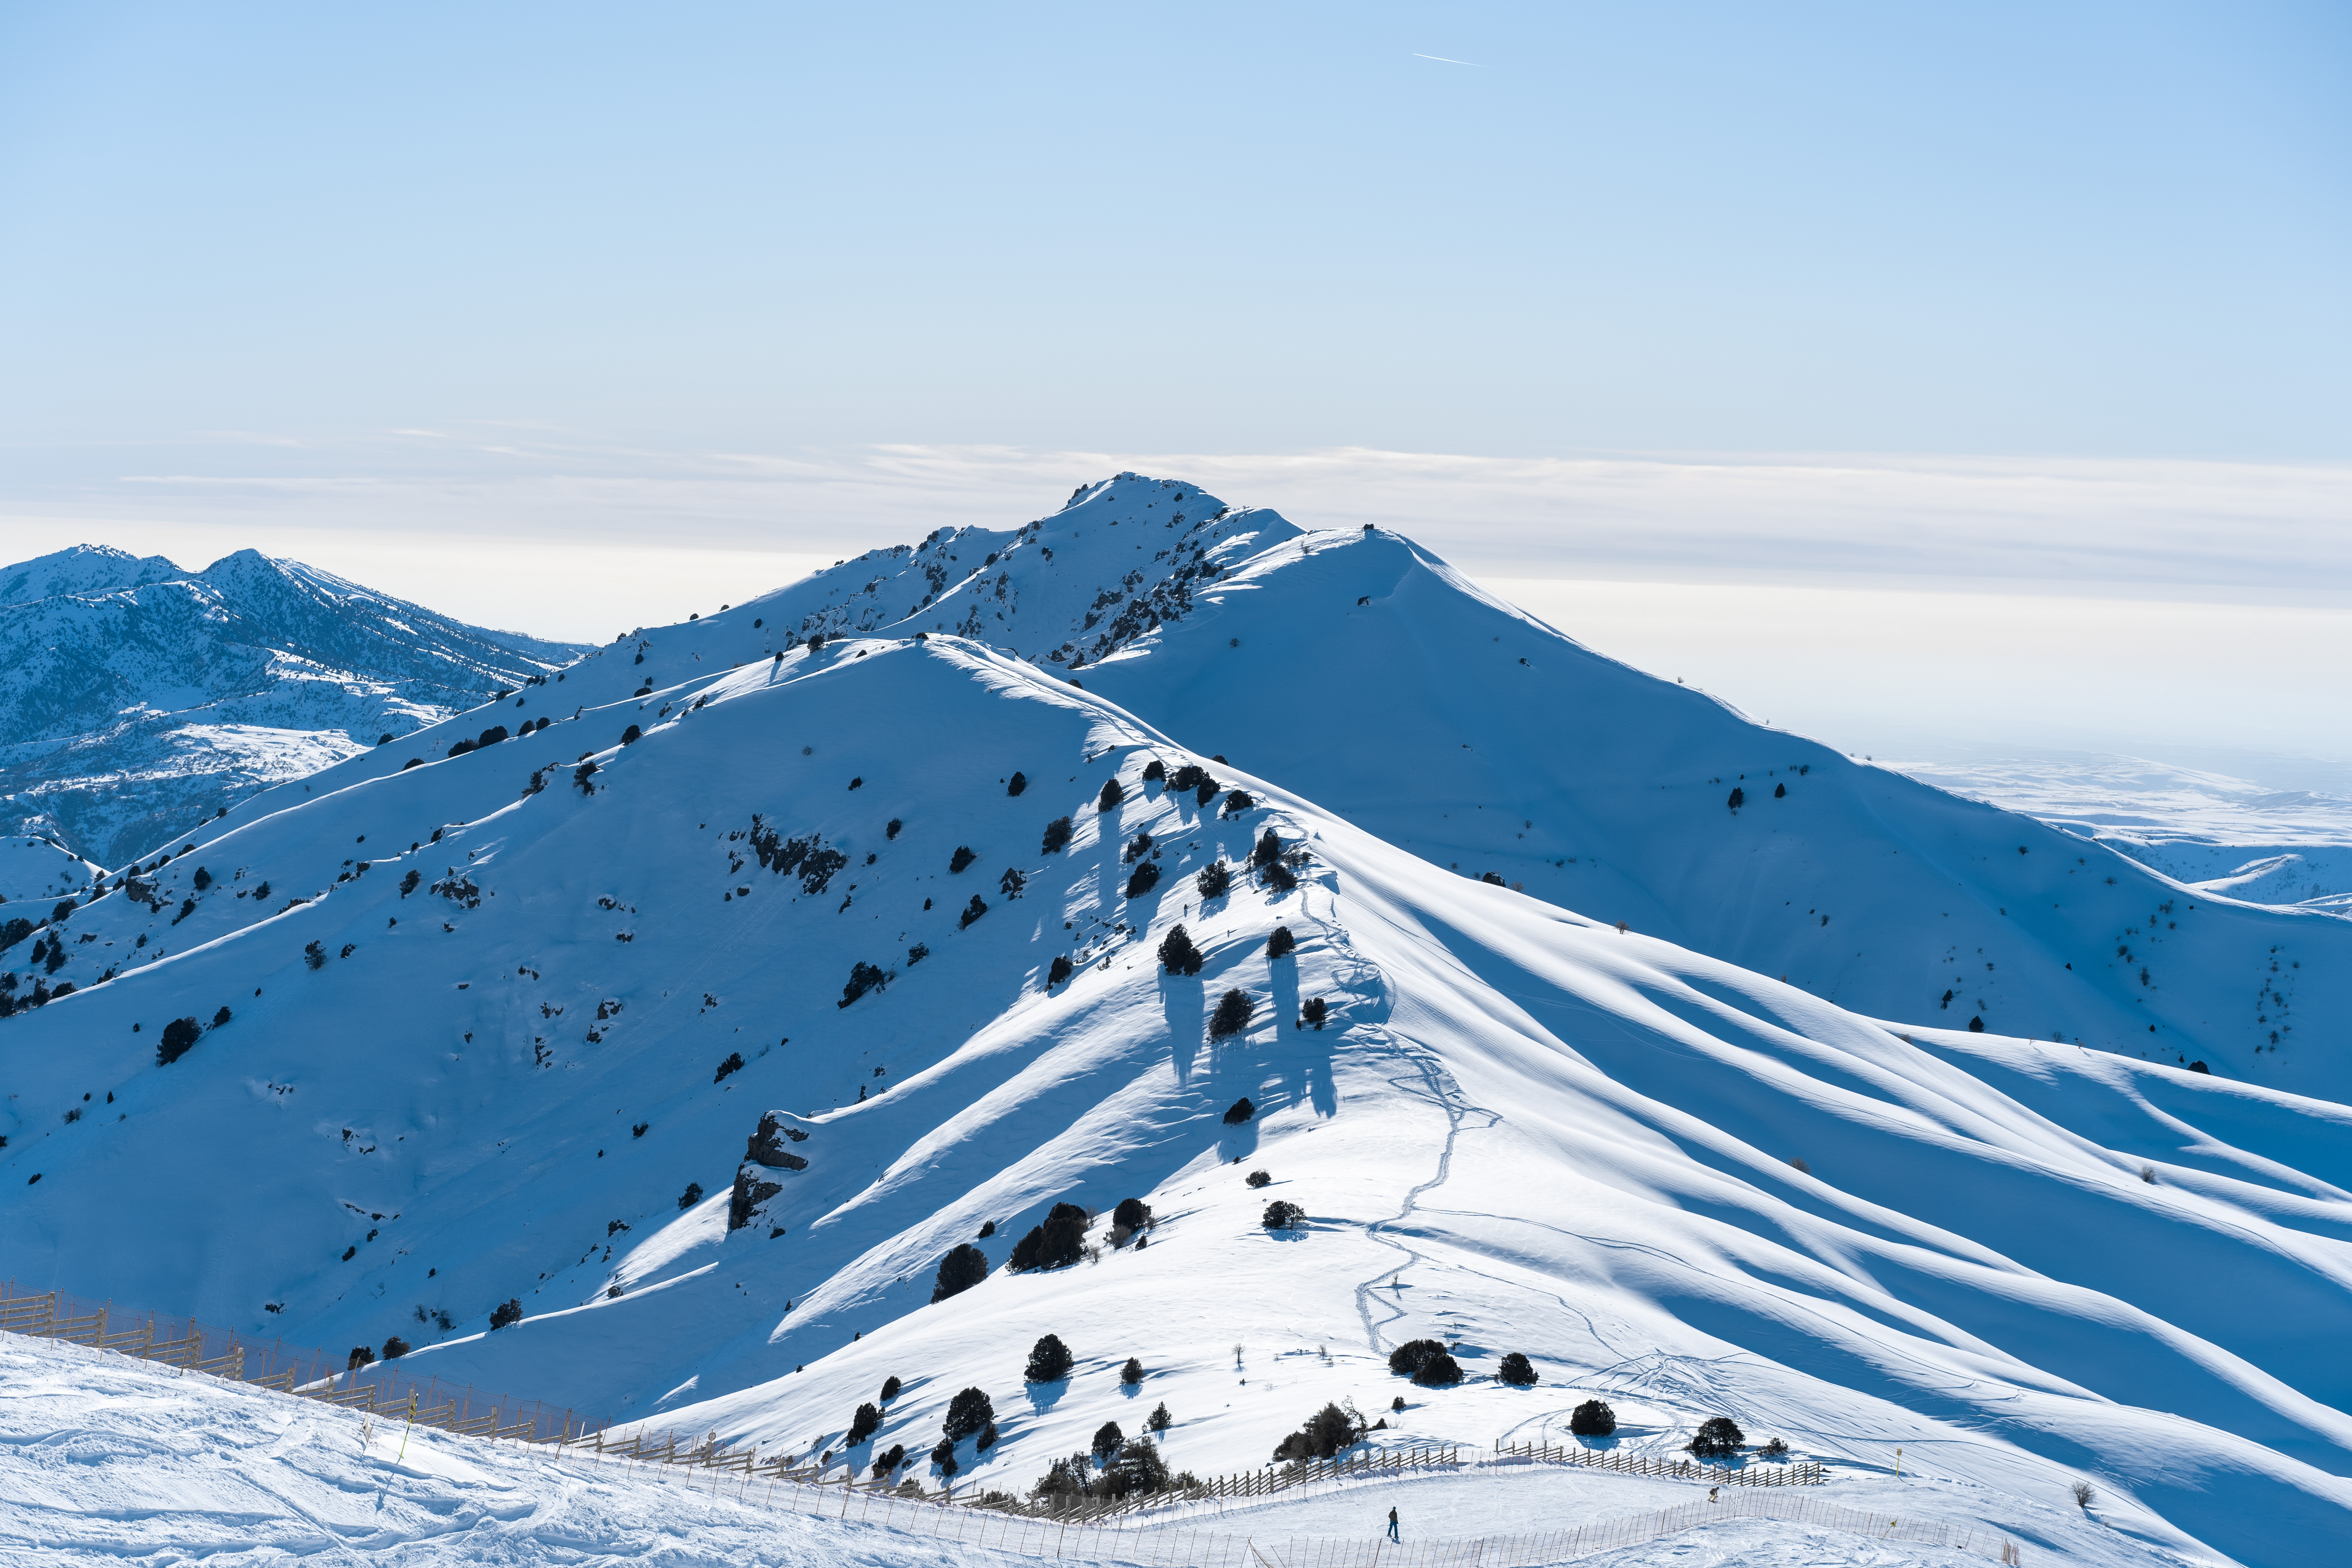 Ski slope in Chimgan region of the Tian Shan mountain range near Taskent city in Uzbekistan – © Pratish Halady / Shutterstock